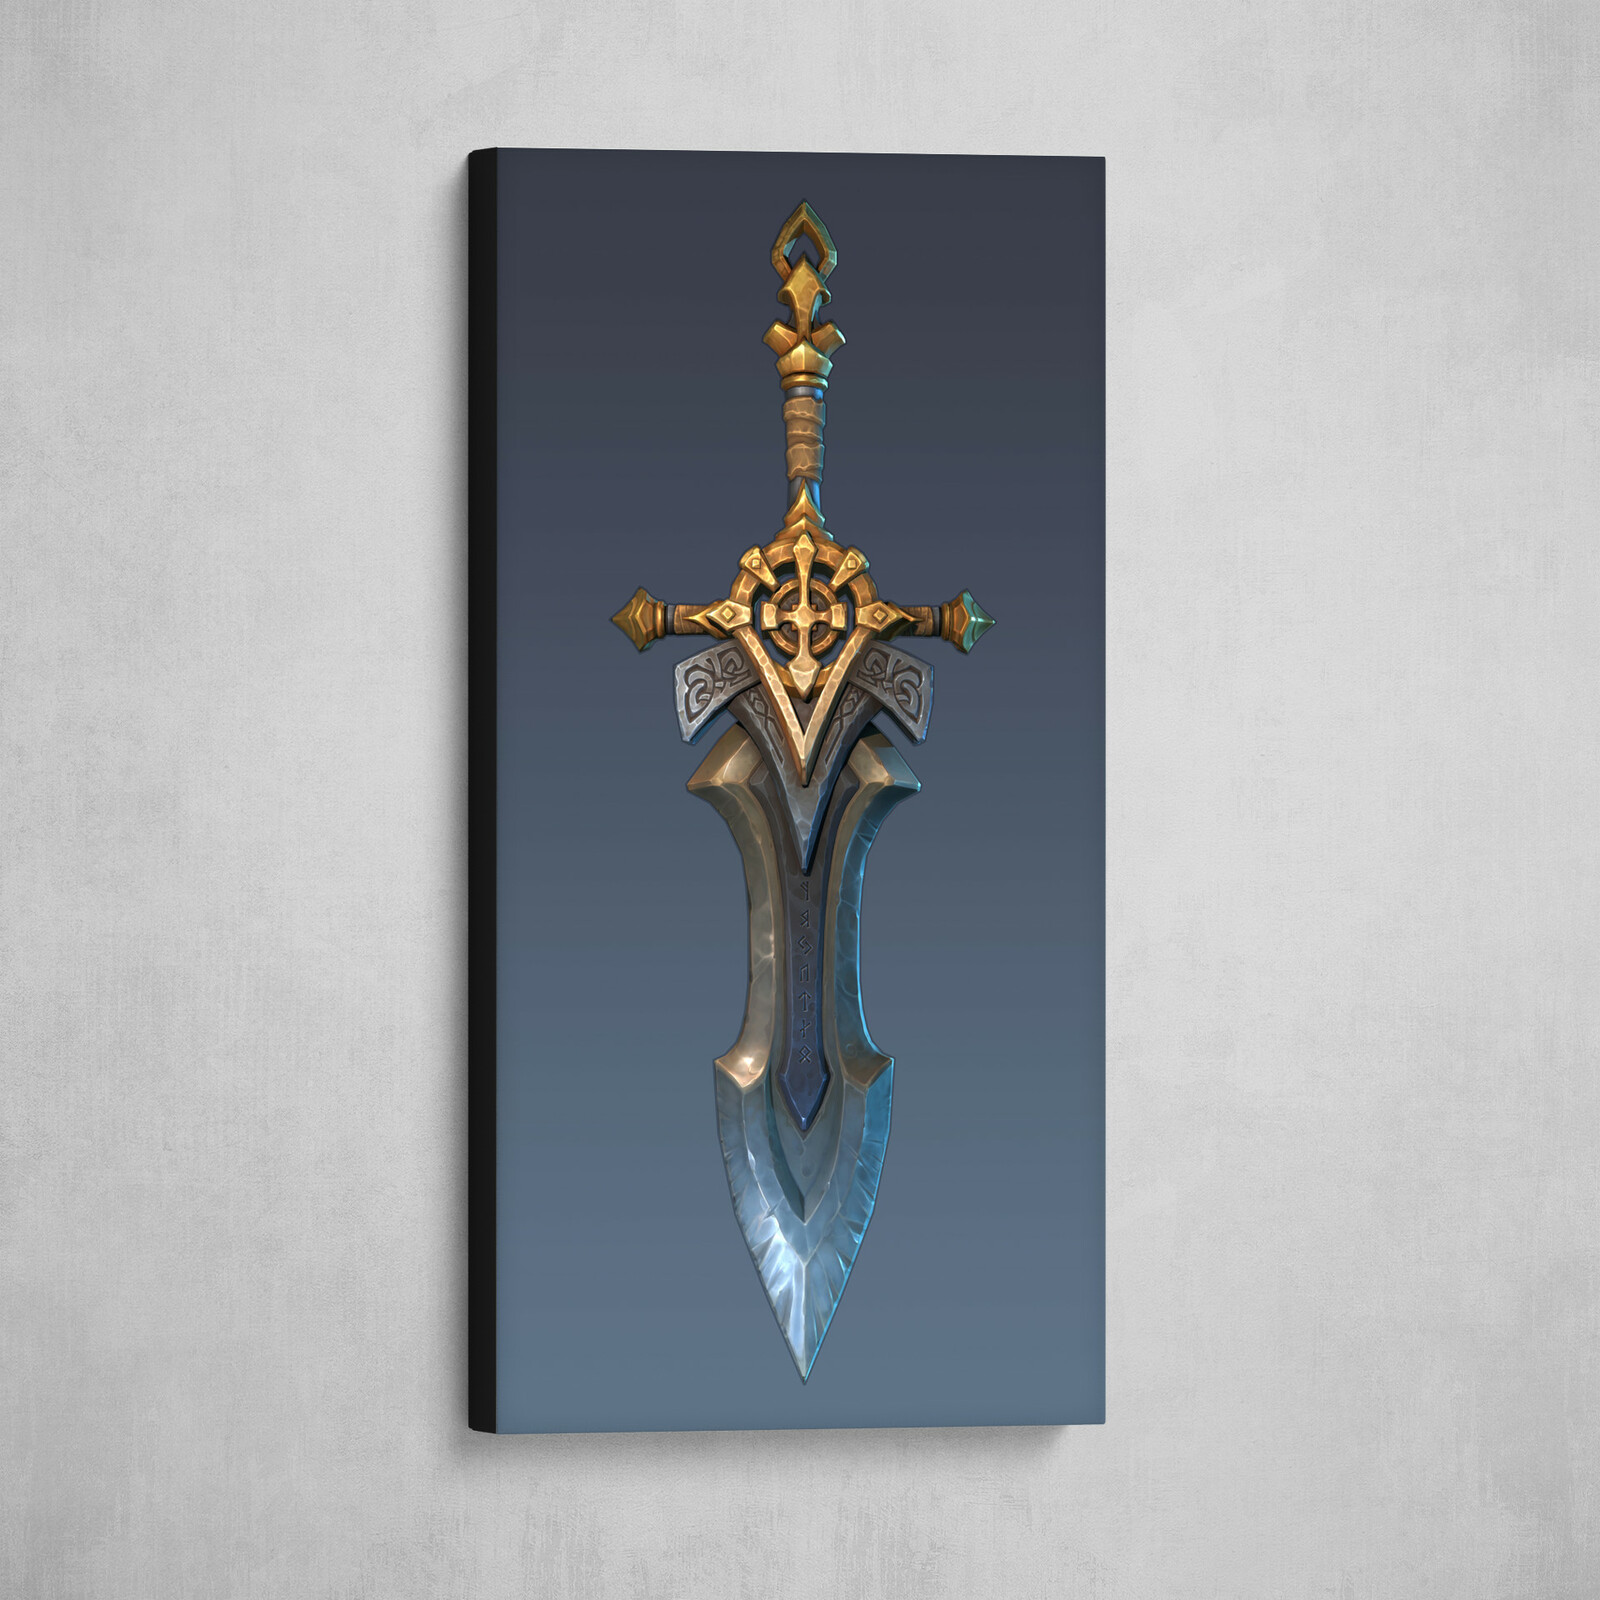 You can now buy an art print of a sword here : https://www.artstation.com/prints/art_print/8Kb0/the-legend-of-king-arthur-artstation-challenge-excalibur